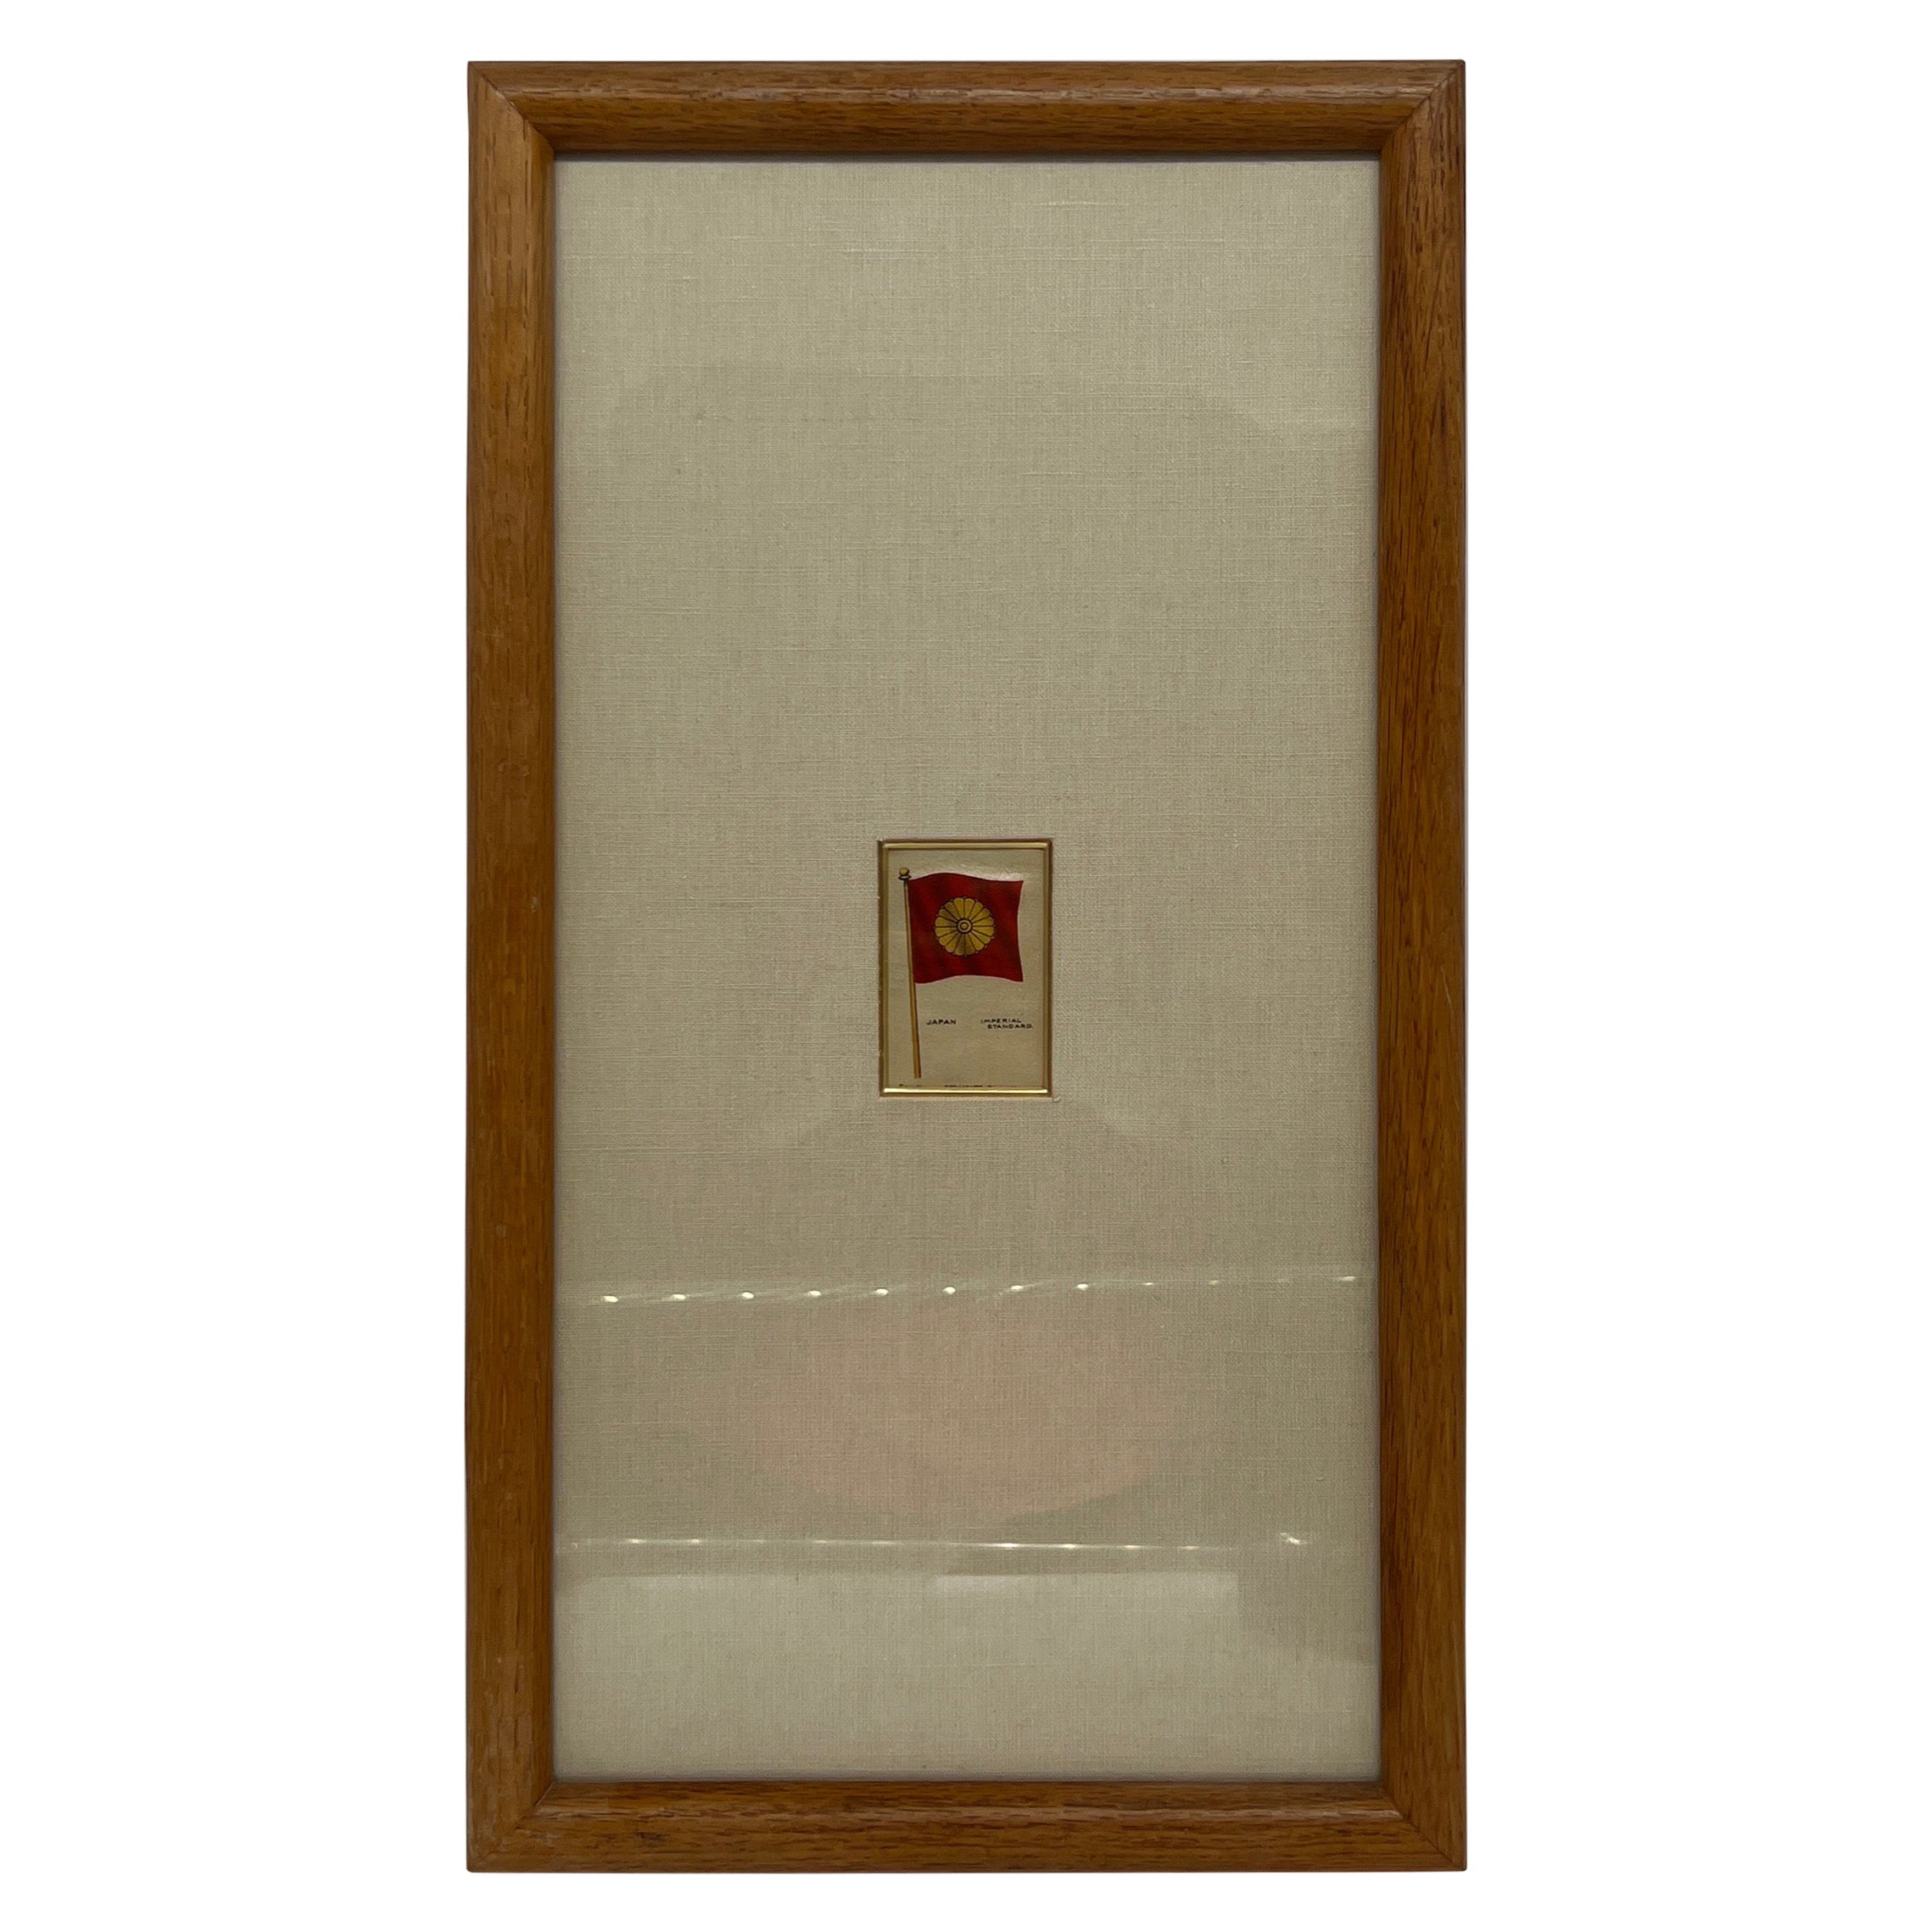 Sovereign Cigarettes "Imperial Standard" Japan Flag on Silk Framed Art For Sale